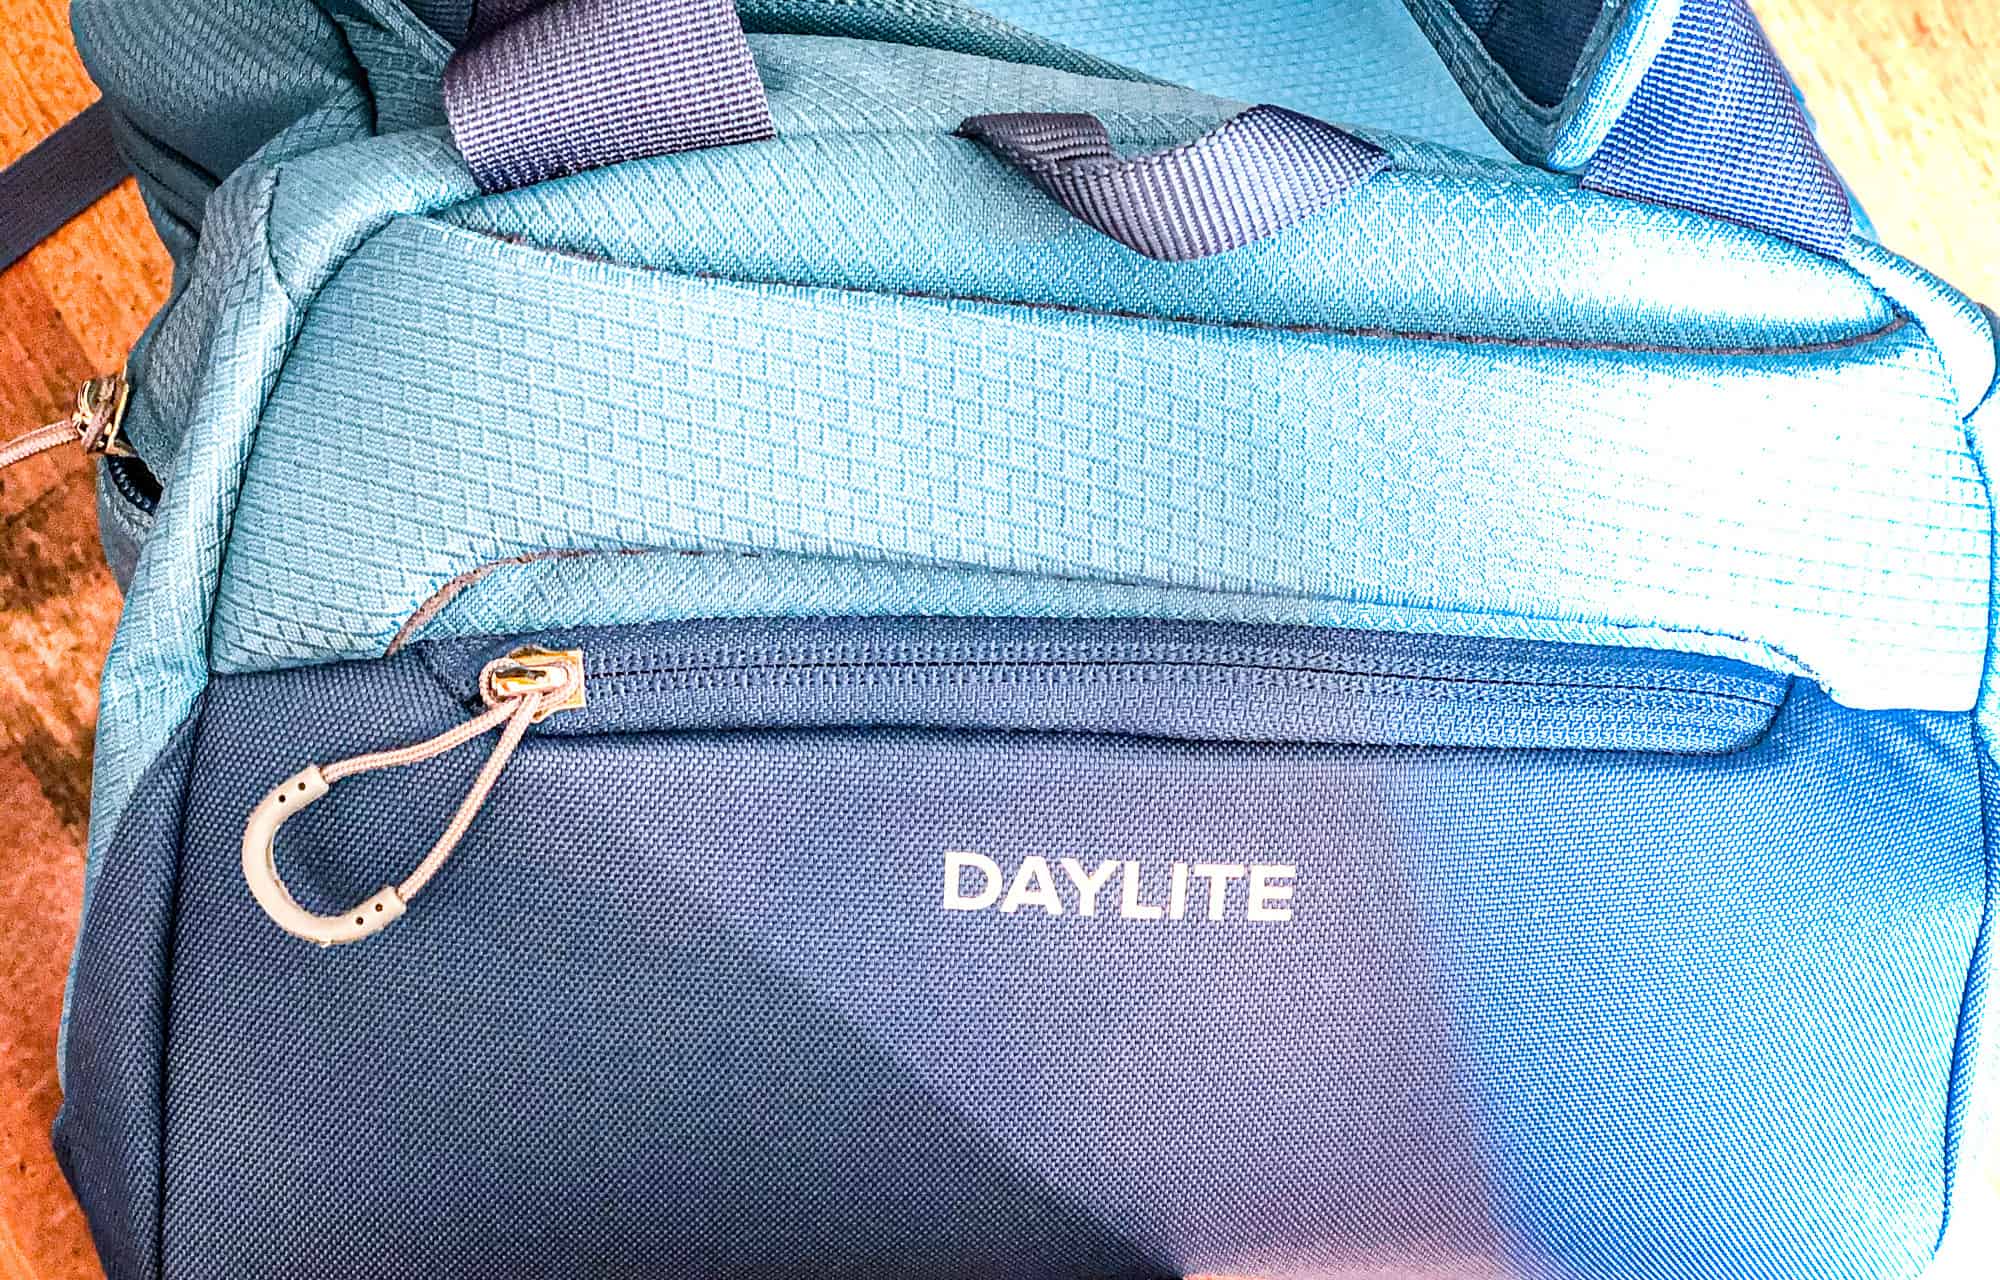 Osprey Daylite Review